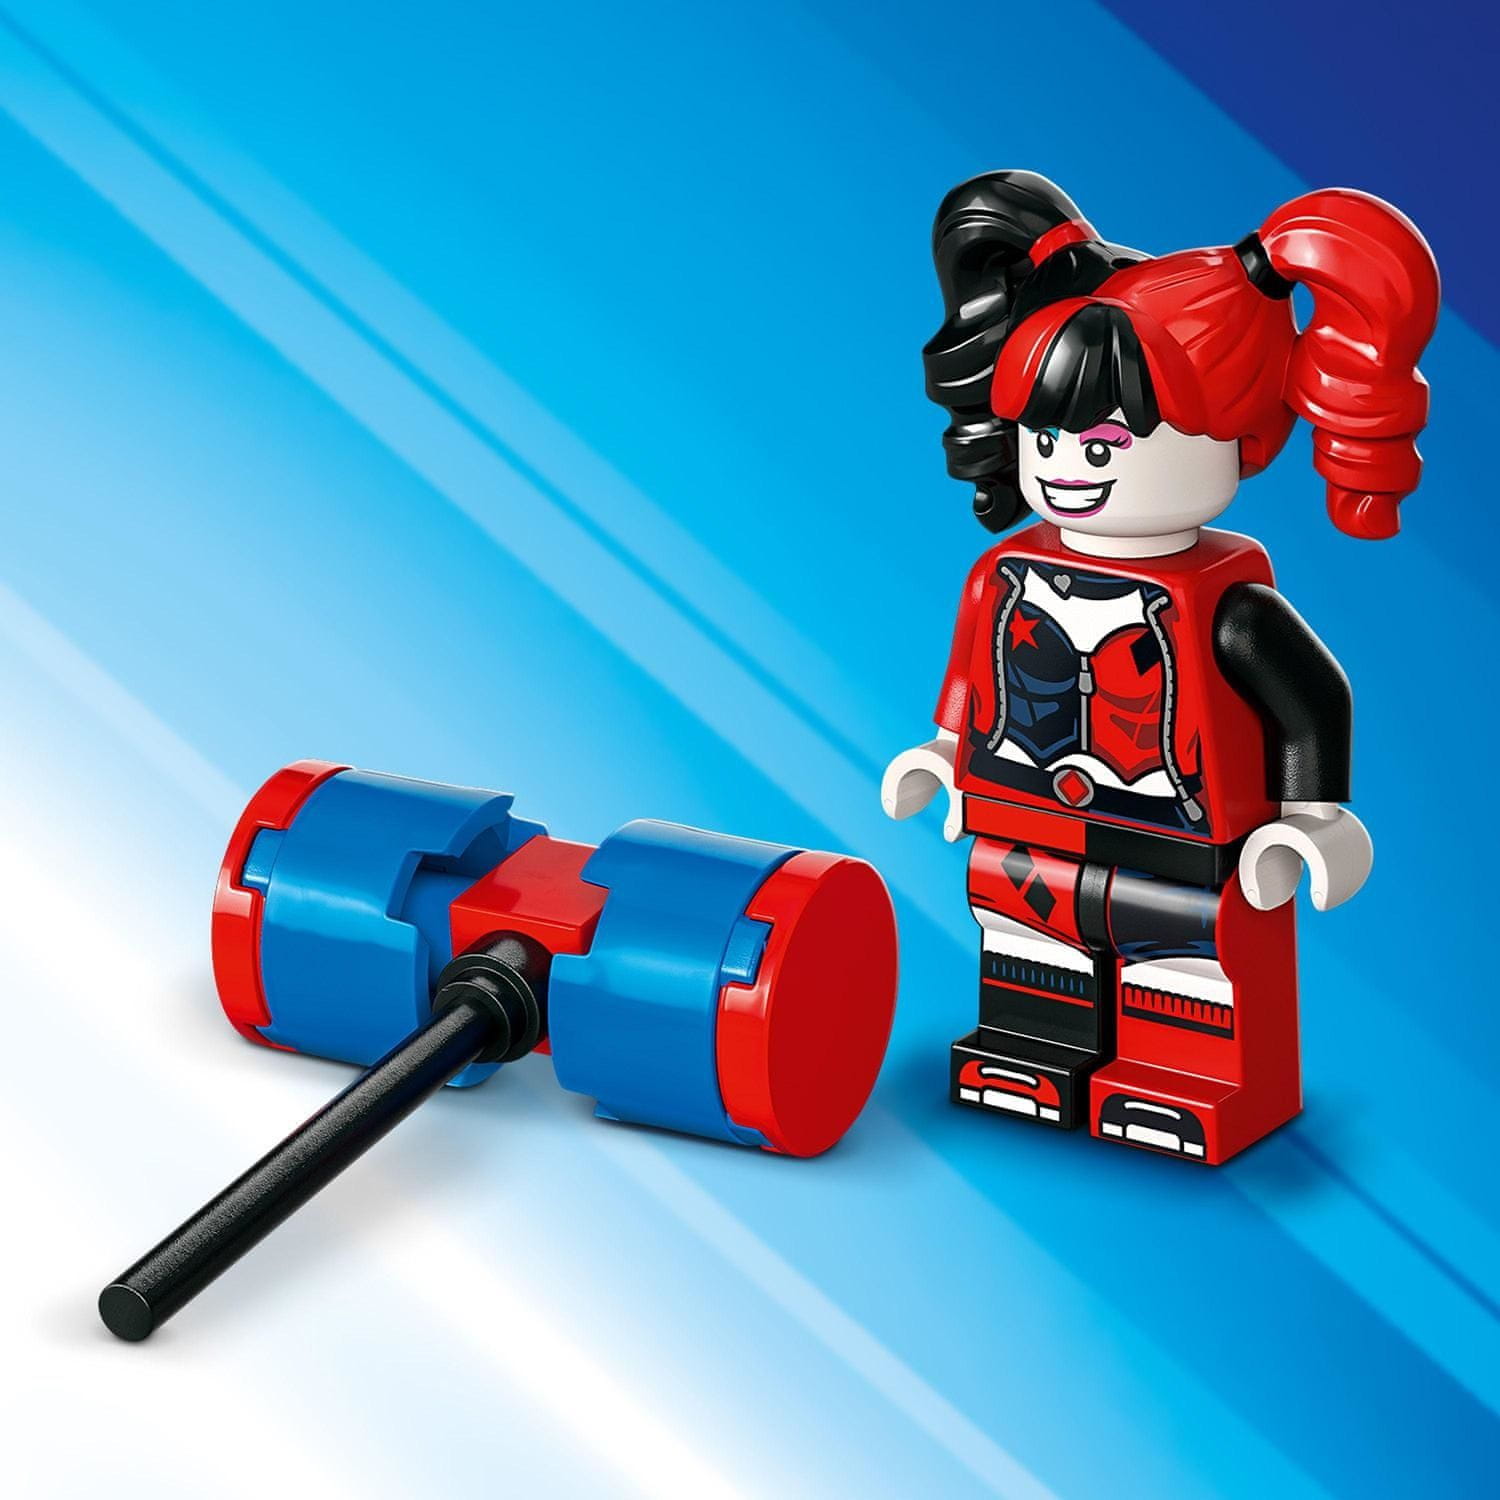 LEGO DC Batman 76220 Batman proti Harley Quinn